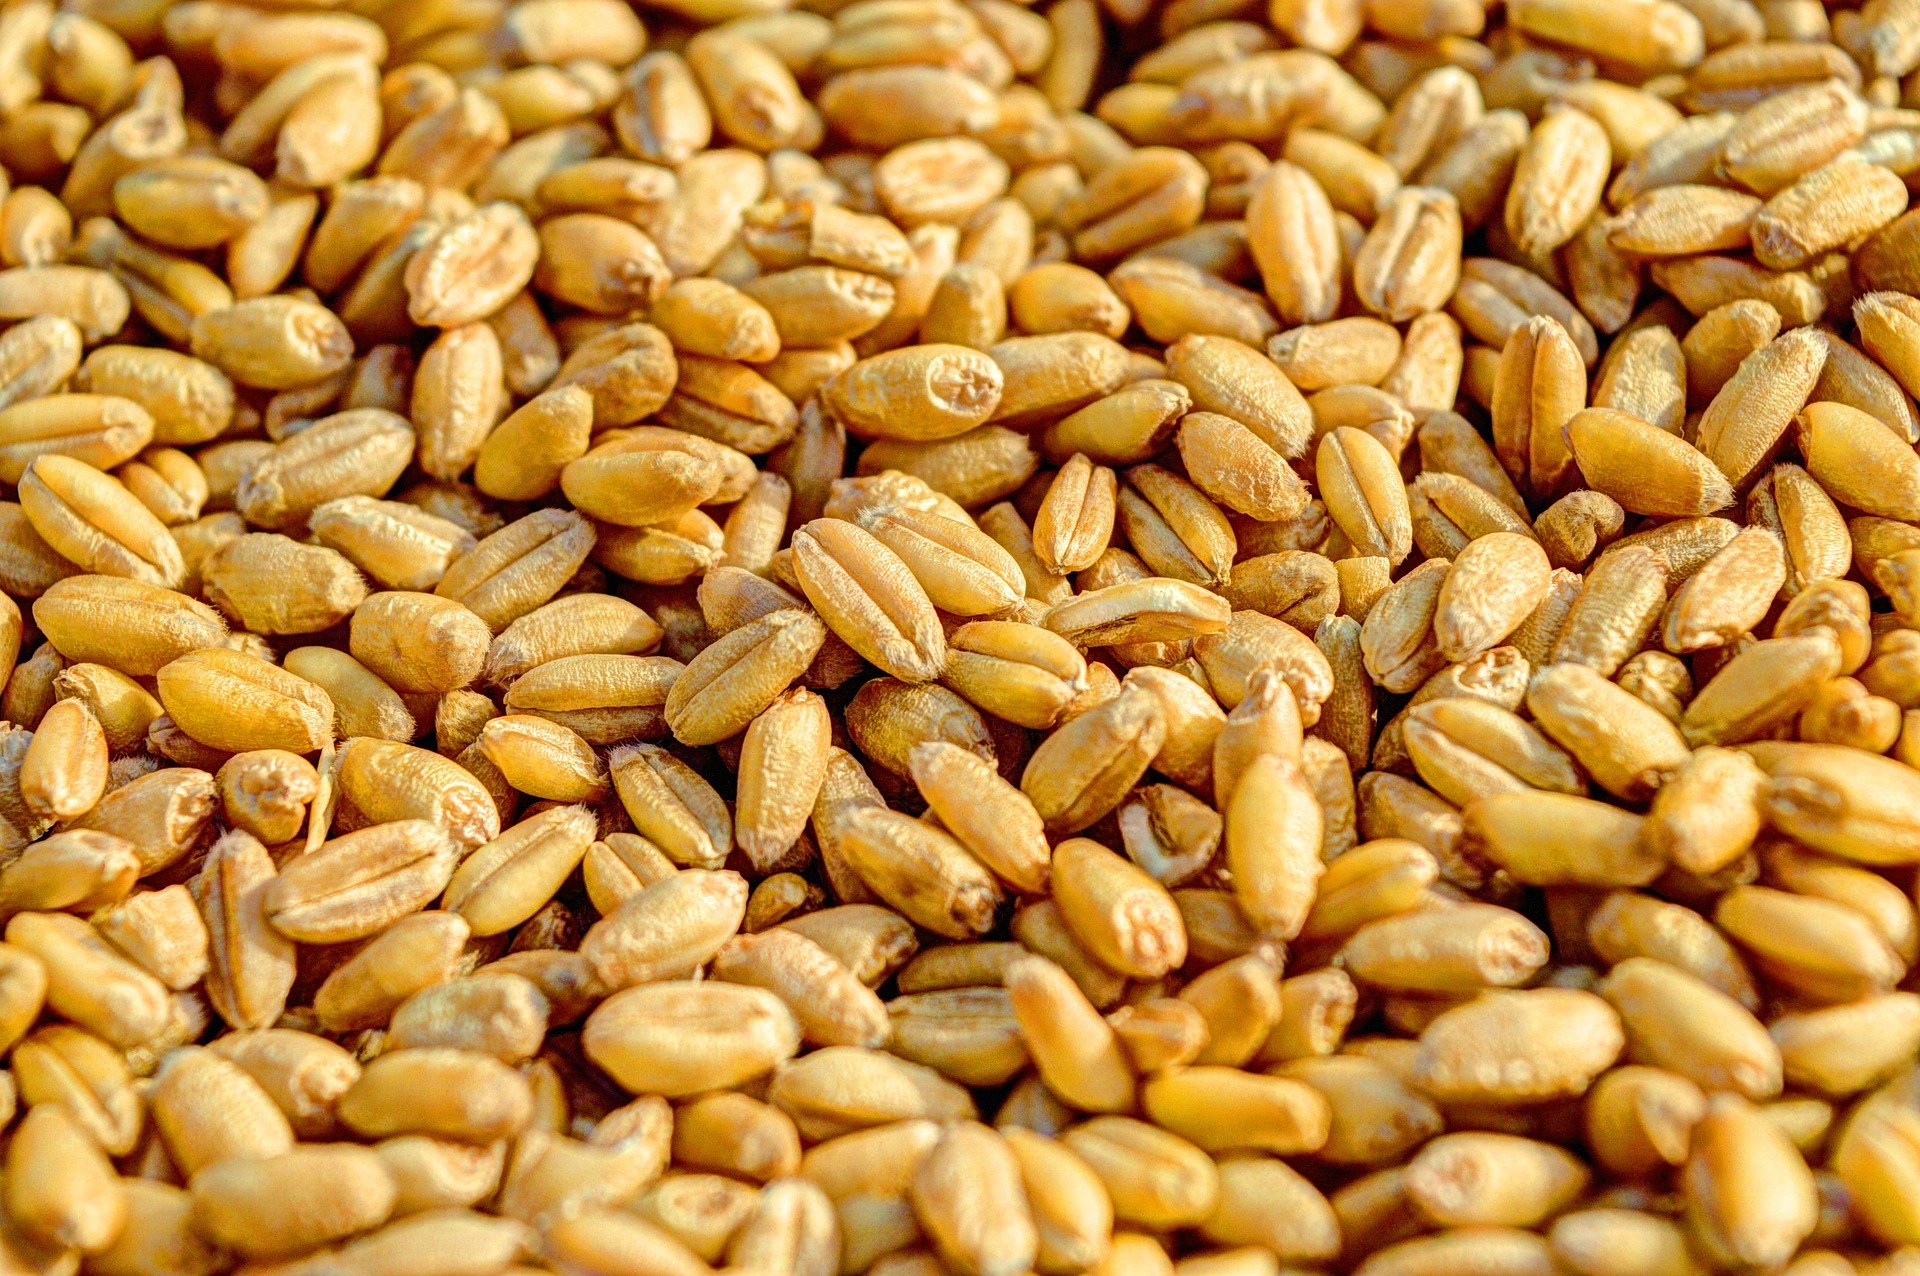 Wheat seed